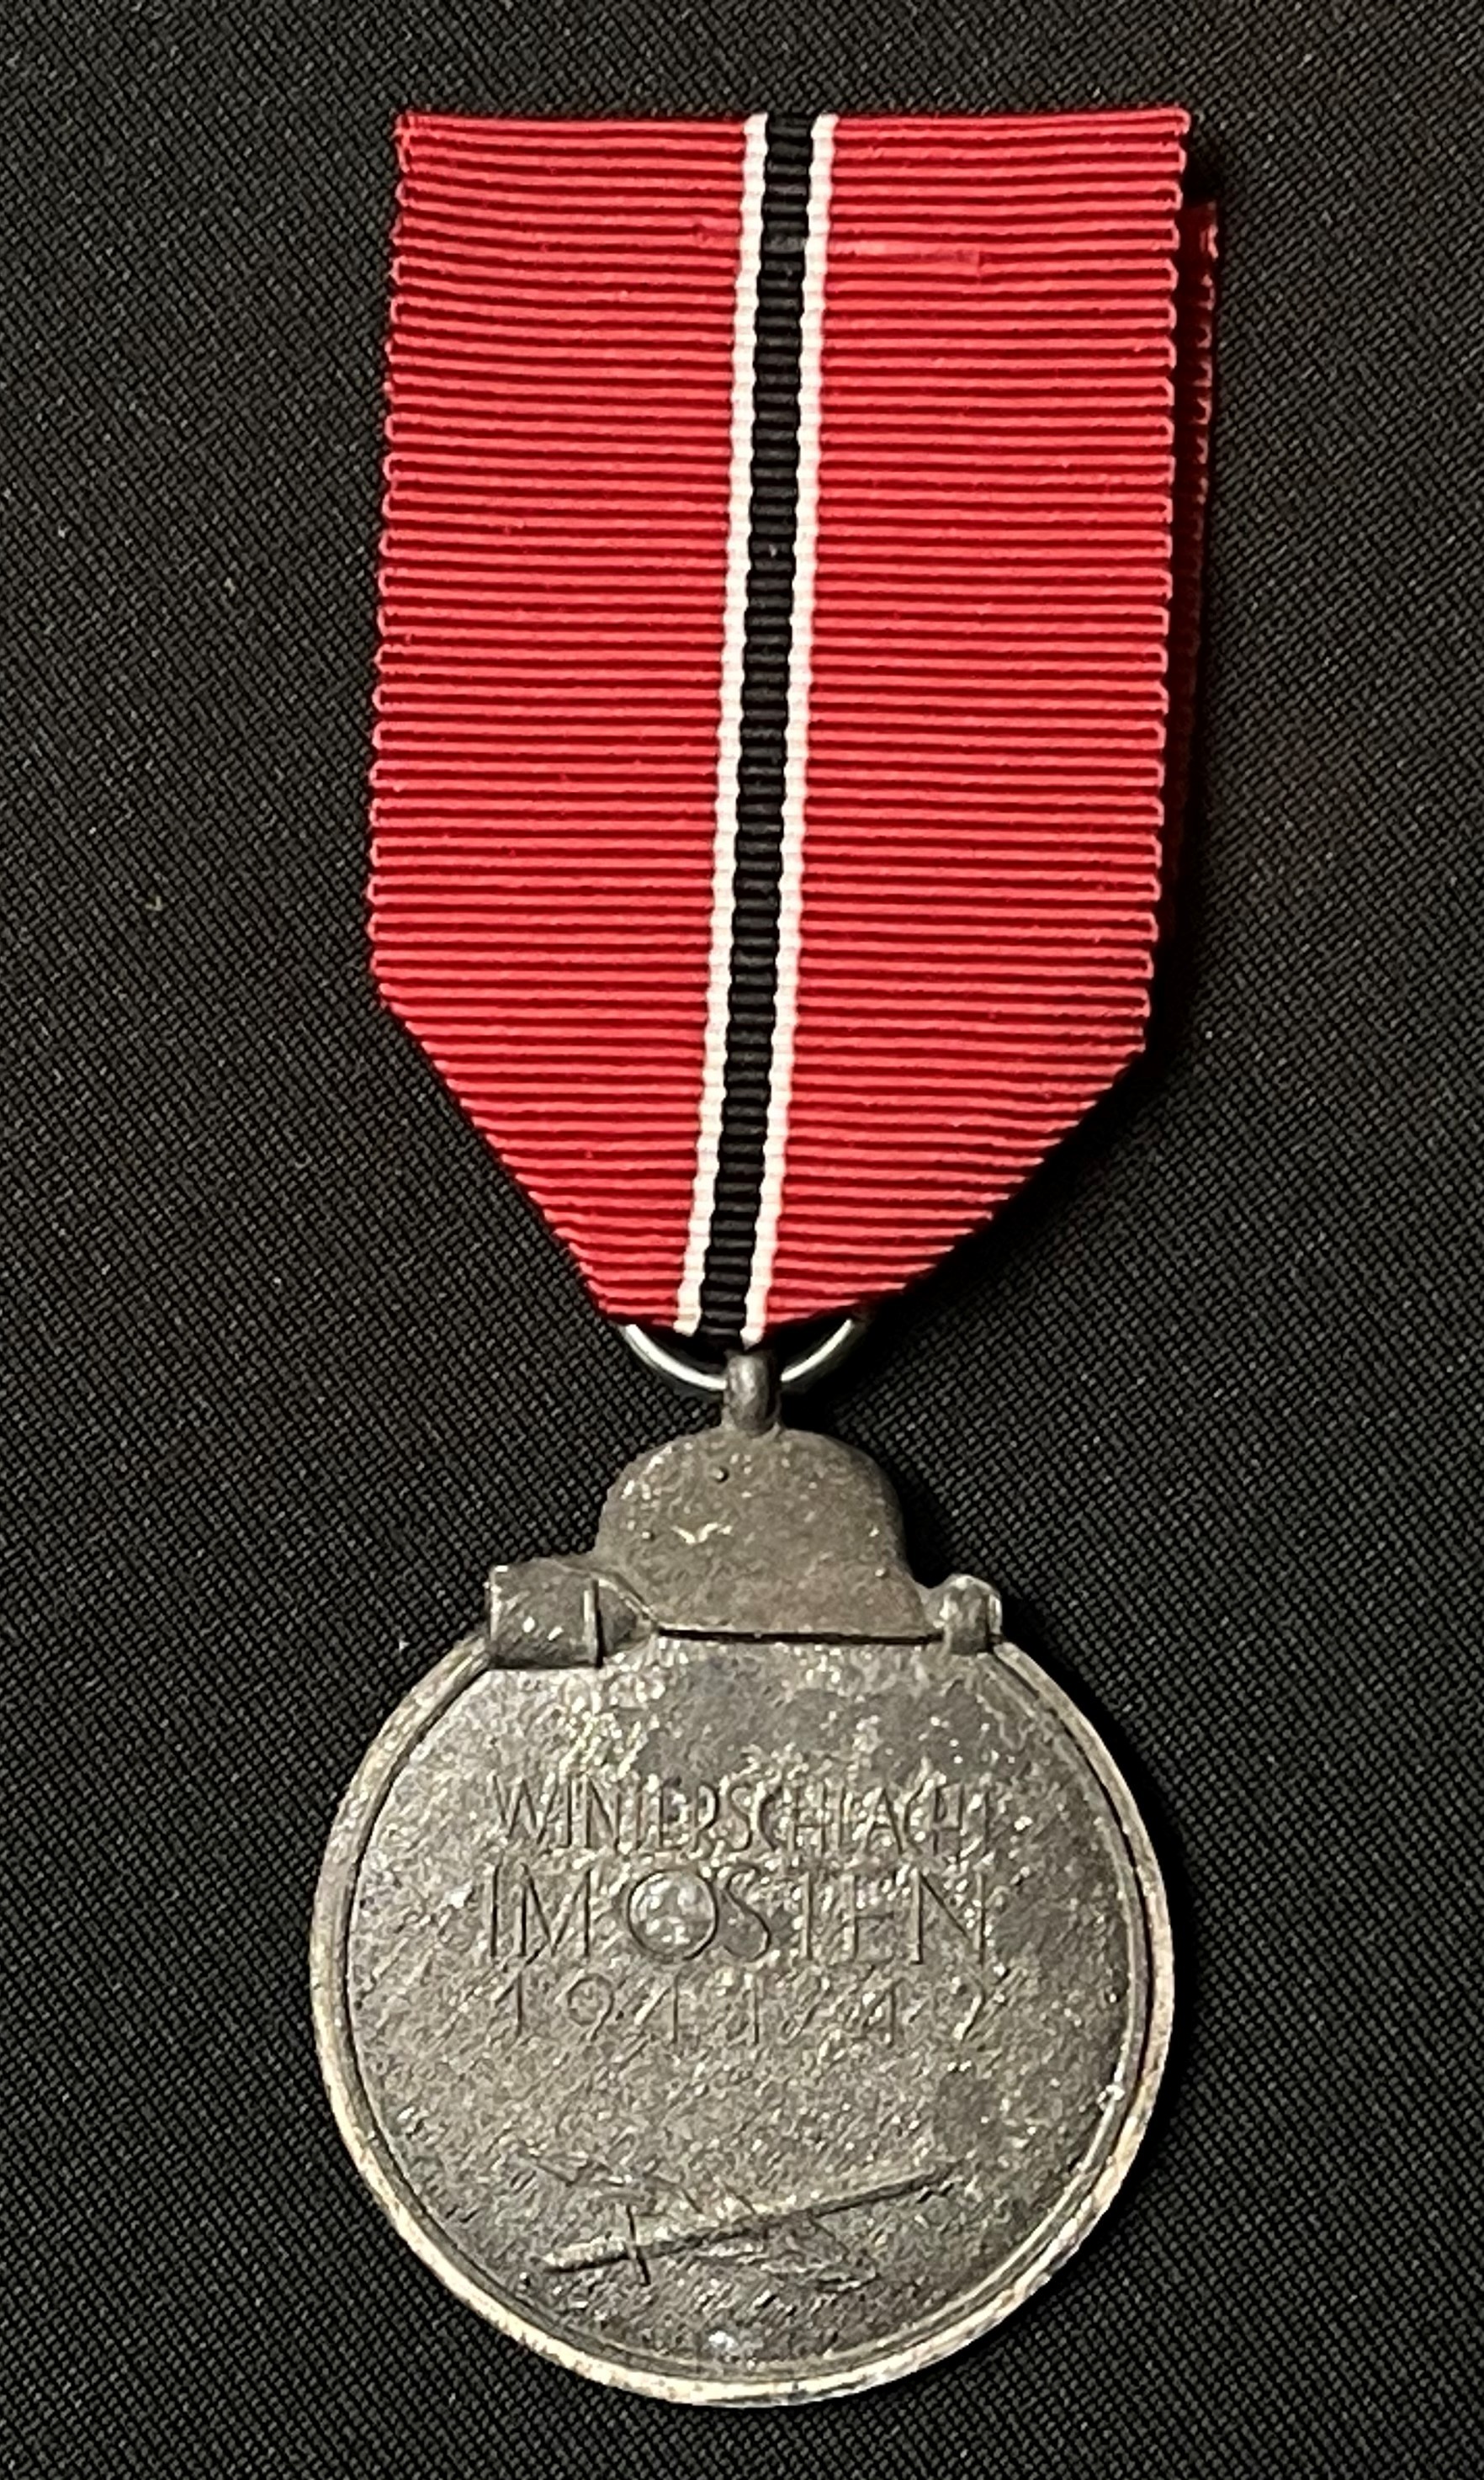 WW2 Third Reich Medaille "Winterschlacht im Osten 1941/42" (Ostmedaille) - Russian Front Medal. - Image 3 of 4